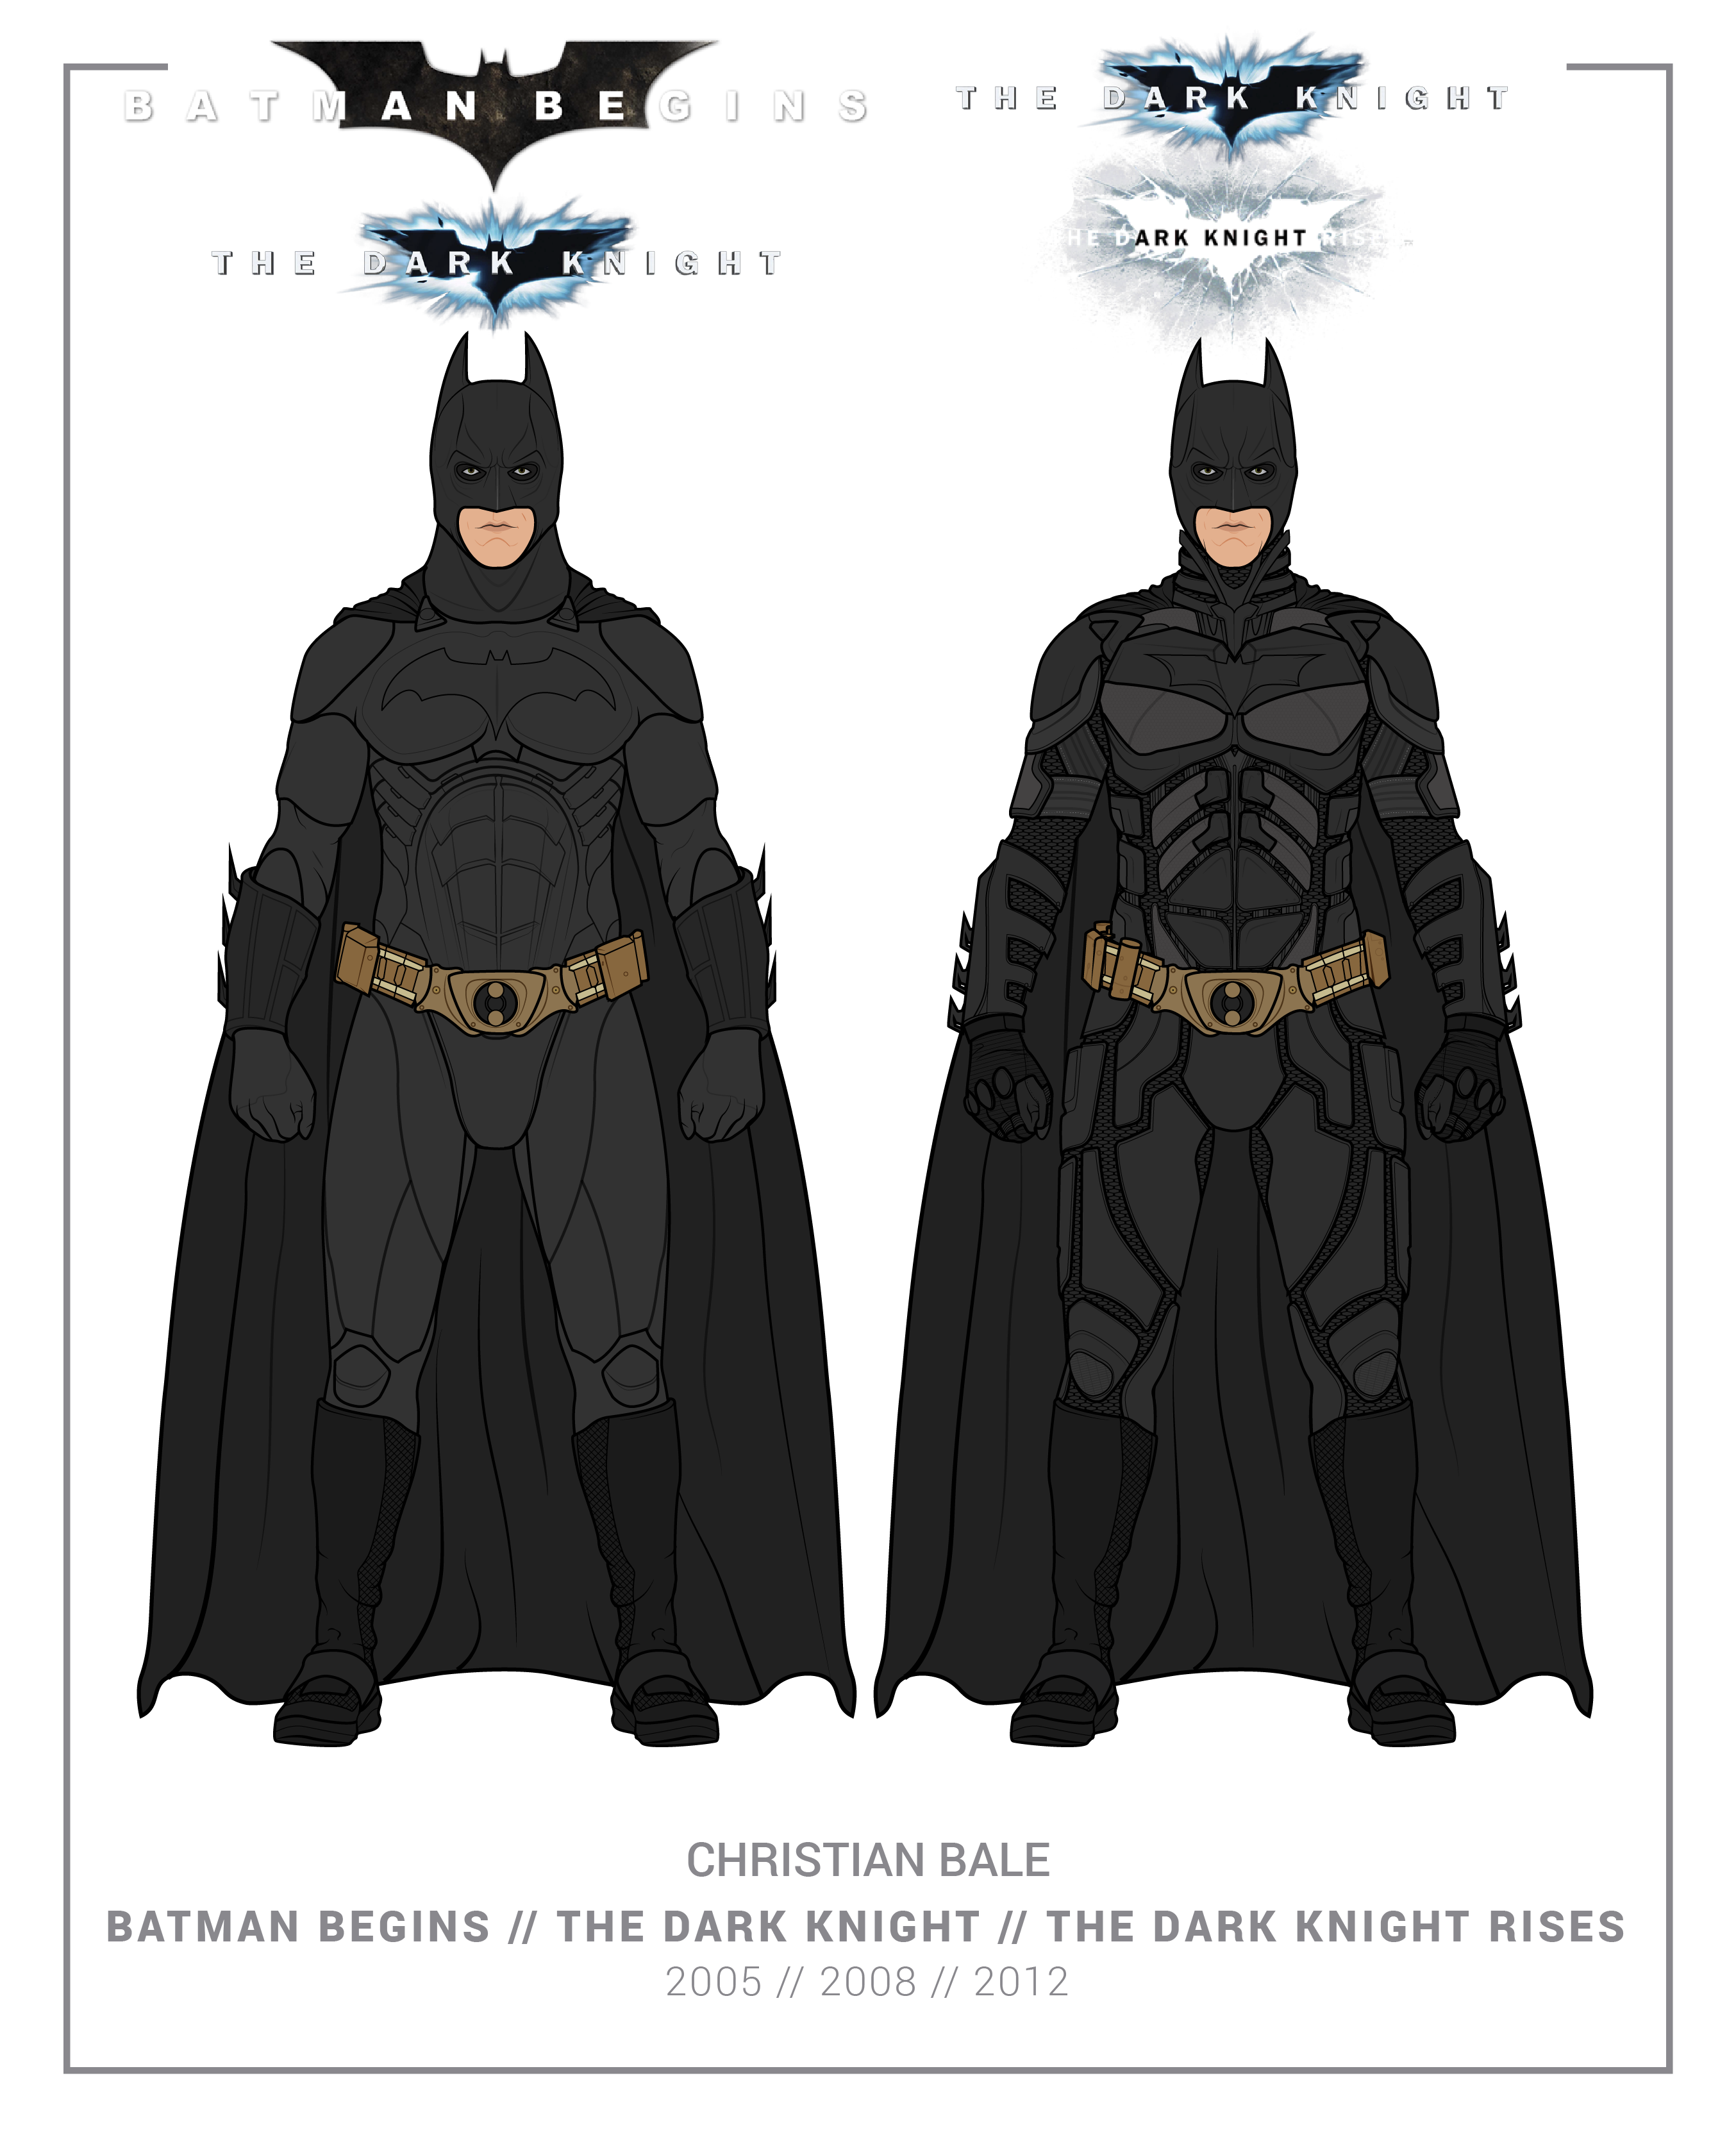 Nolan's Batman (2005-2012) by efrajoey1 on DeviantArt